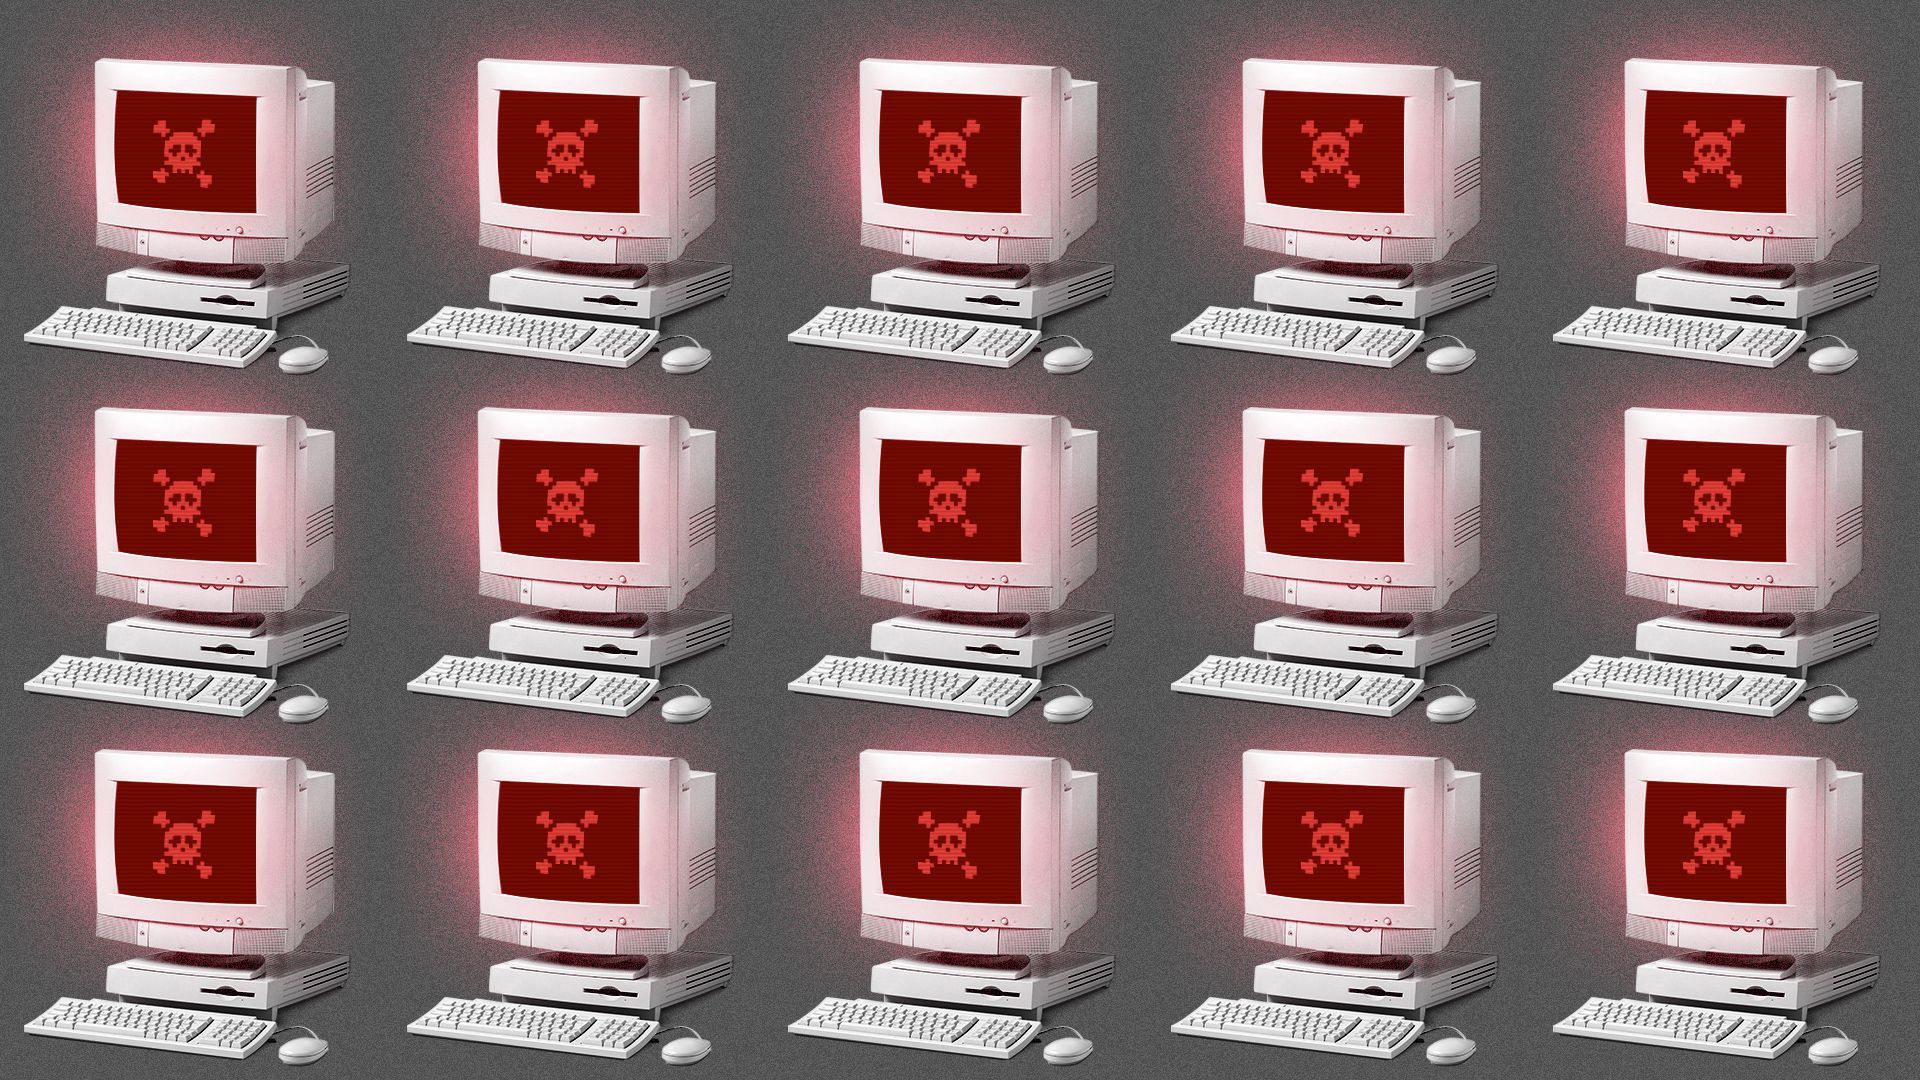 An illustration of multiple hijacked PCs